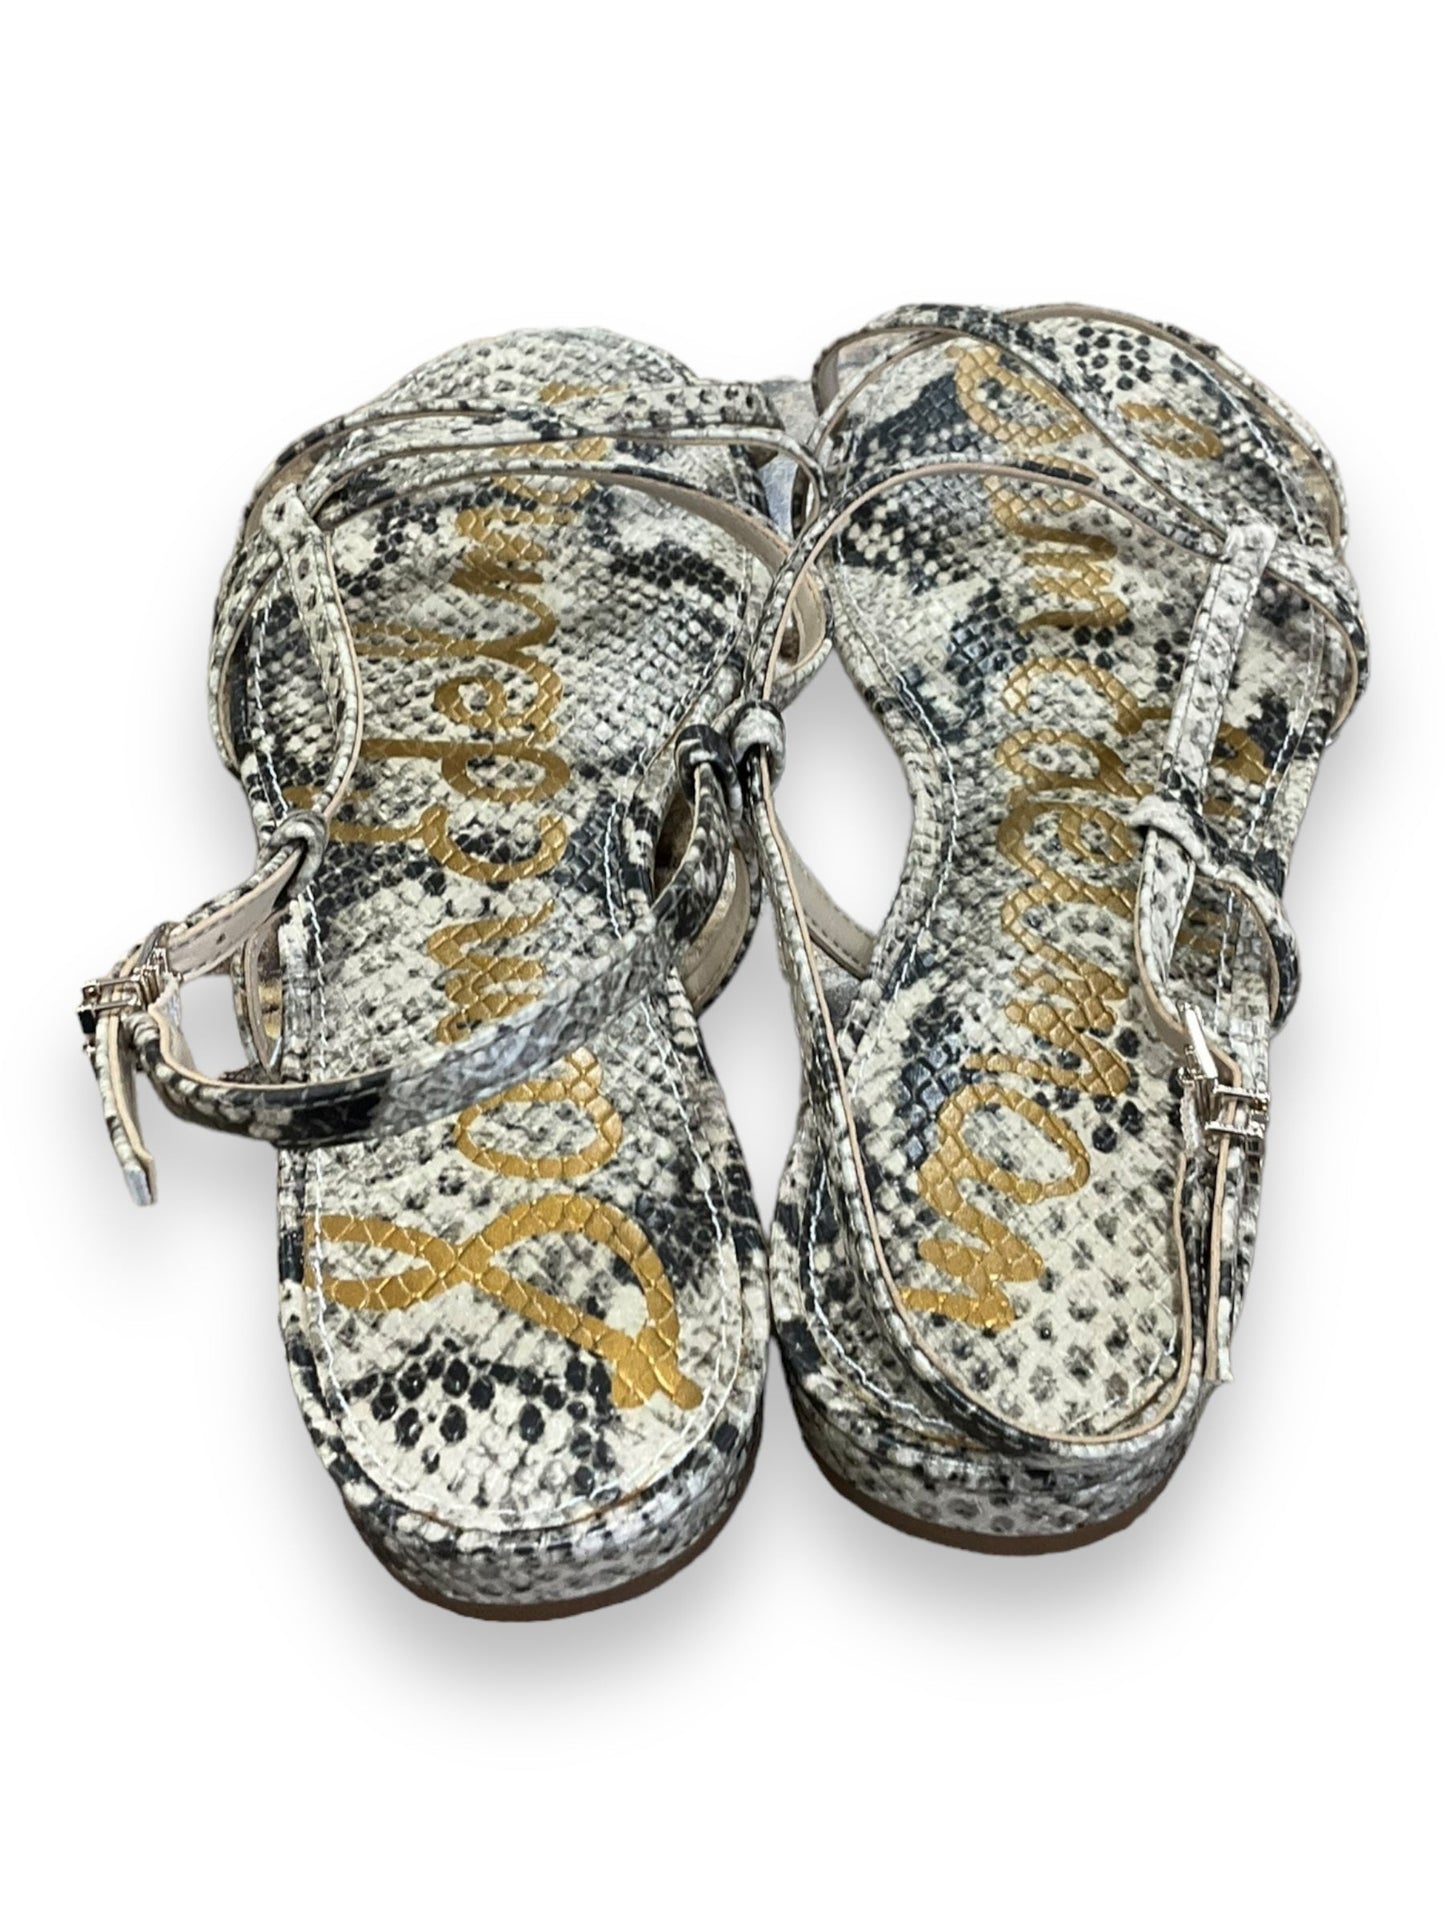 Snakeskin Print Sandals Flats Sam Edelman, Size 8